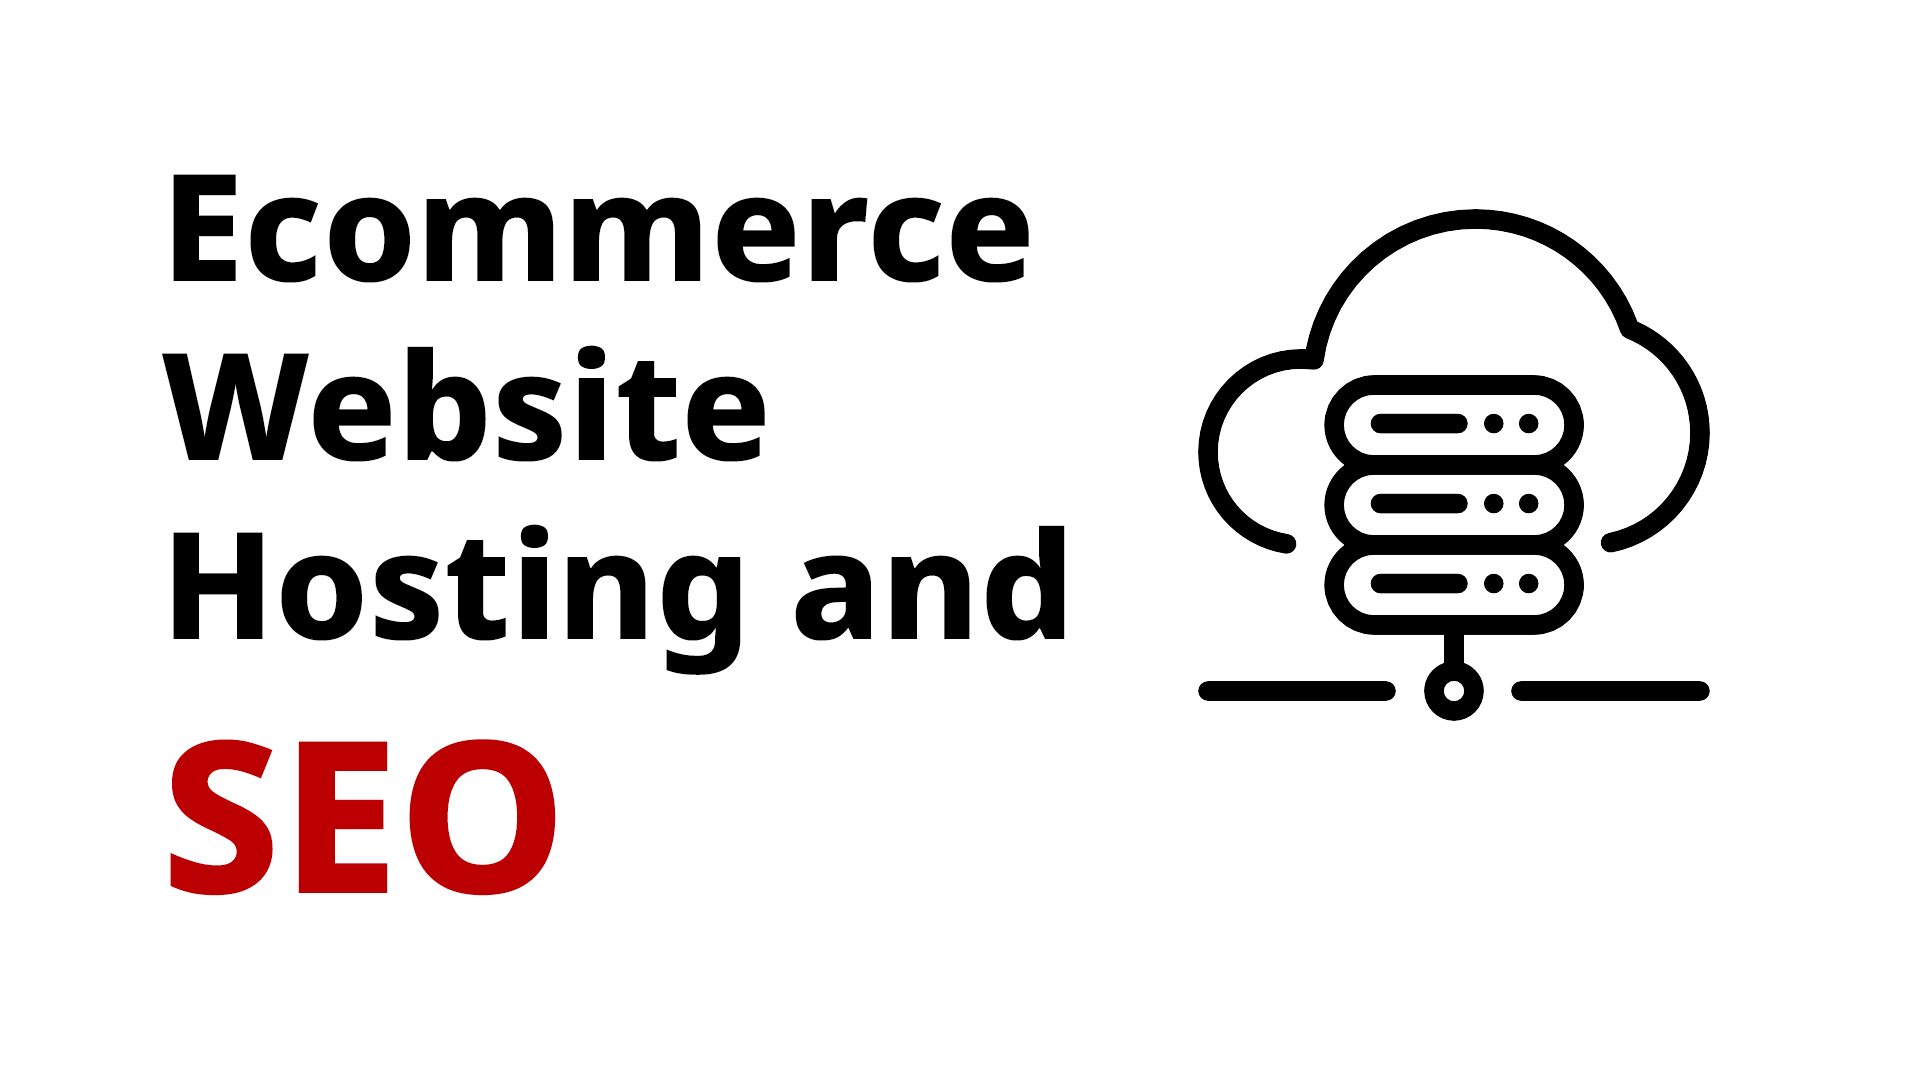 Ecommerce Website Hosting and SEO